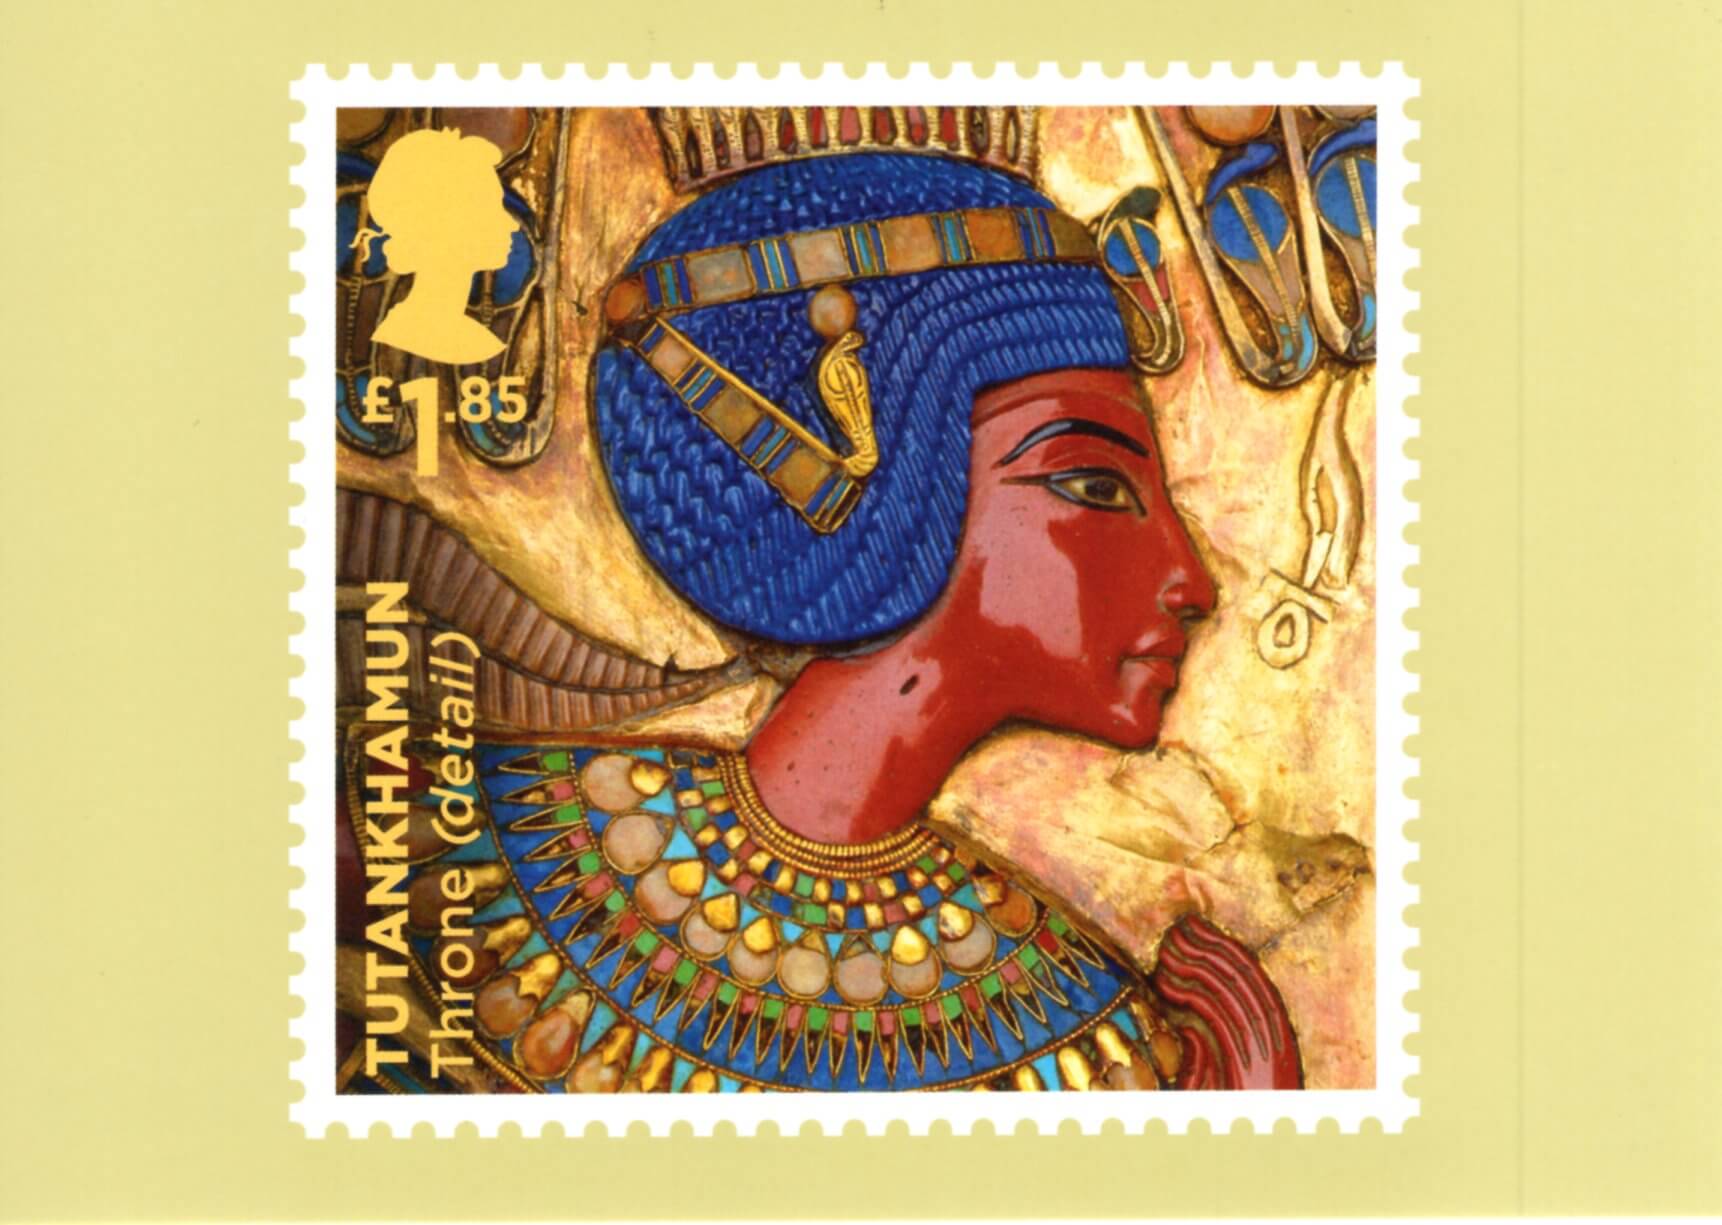  Tutankhamun Postmarked Prestige Stamp Book by Royal